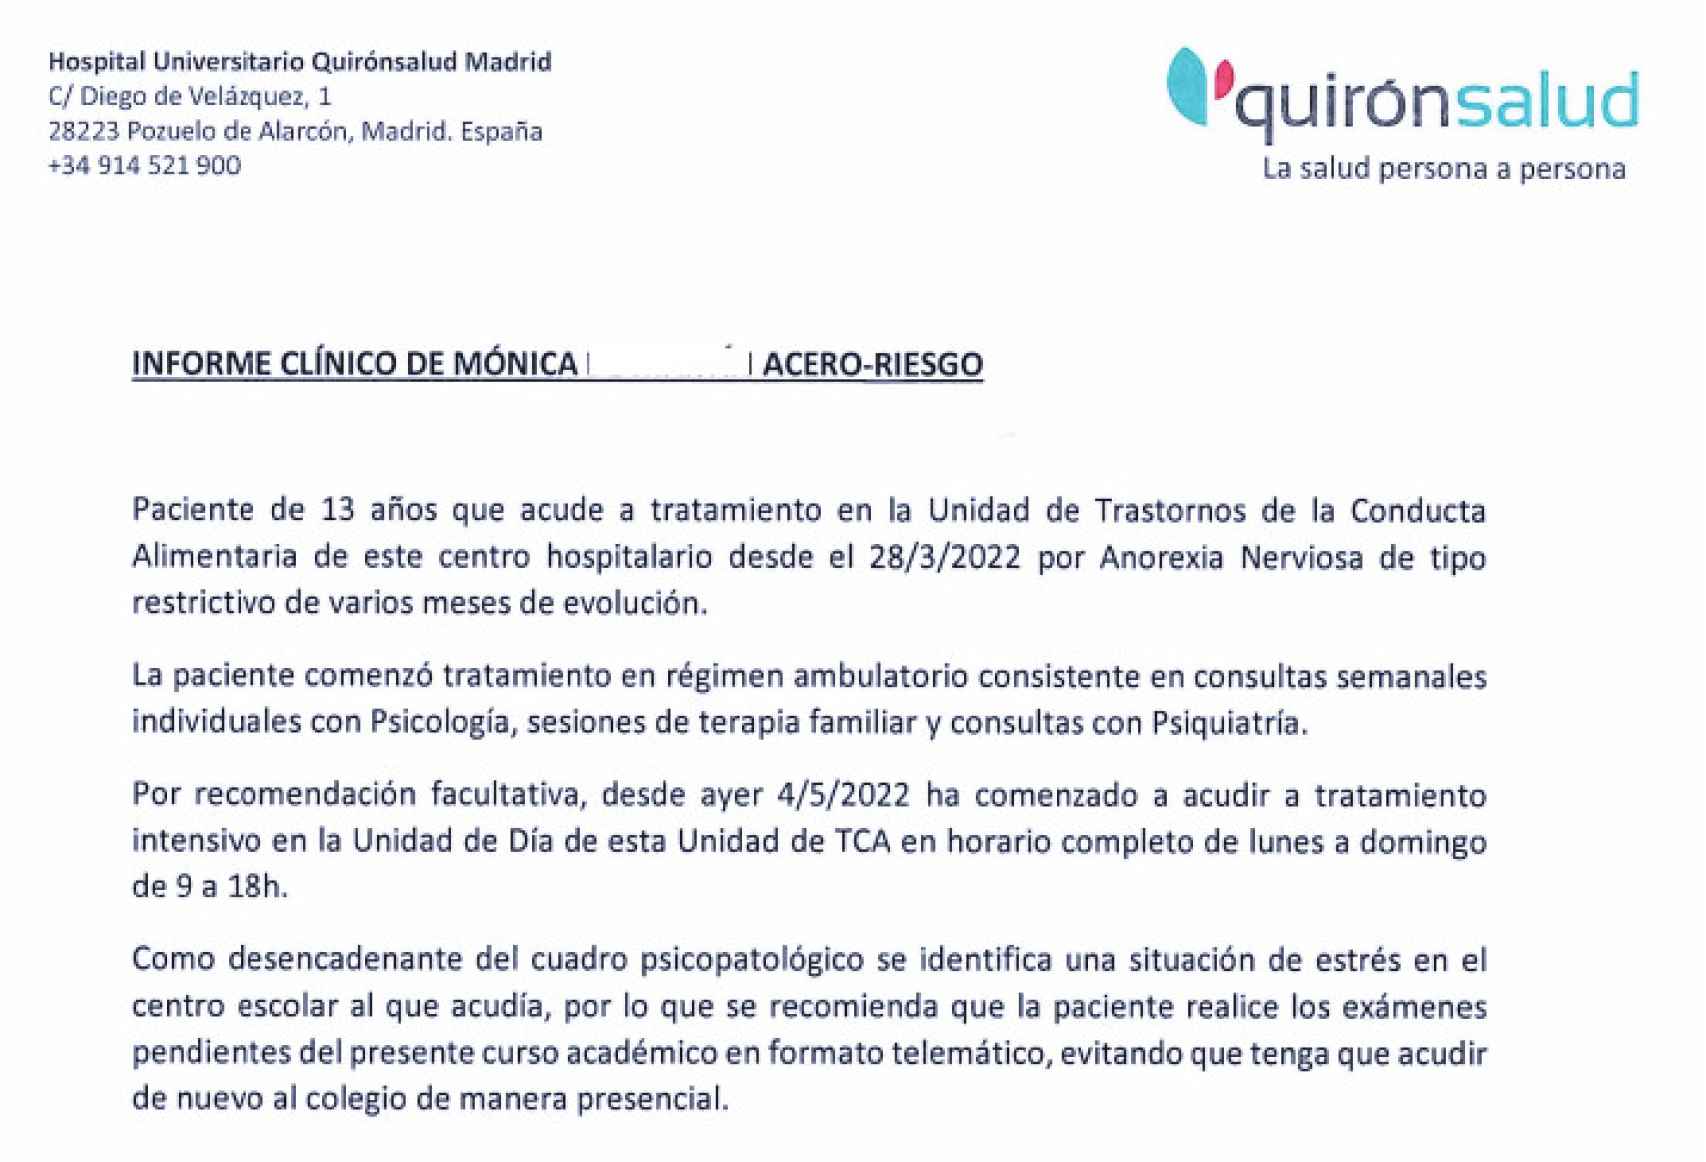 Informe psiquiátrico de Mónica Acero-Riesgo remitido por el Hospital Quirónsalud